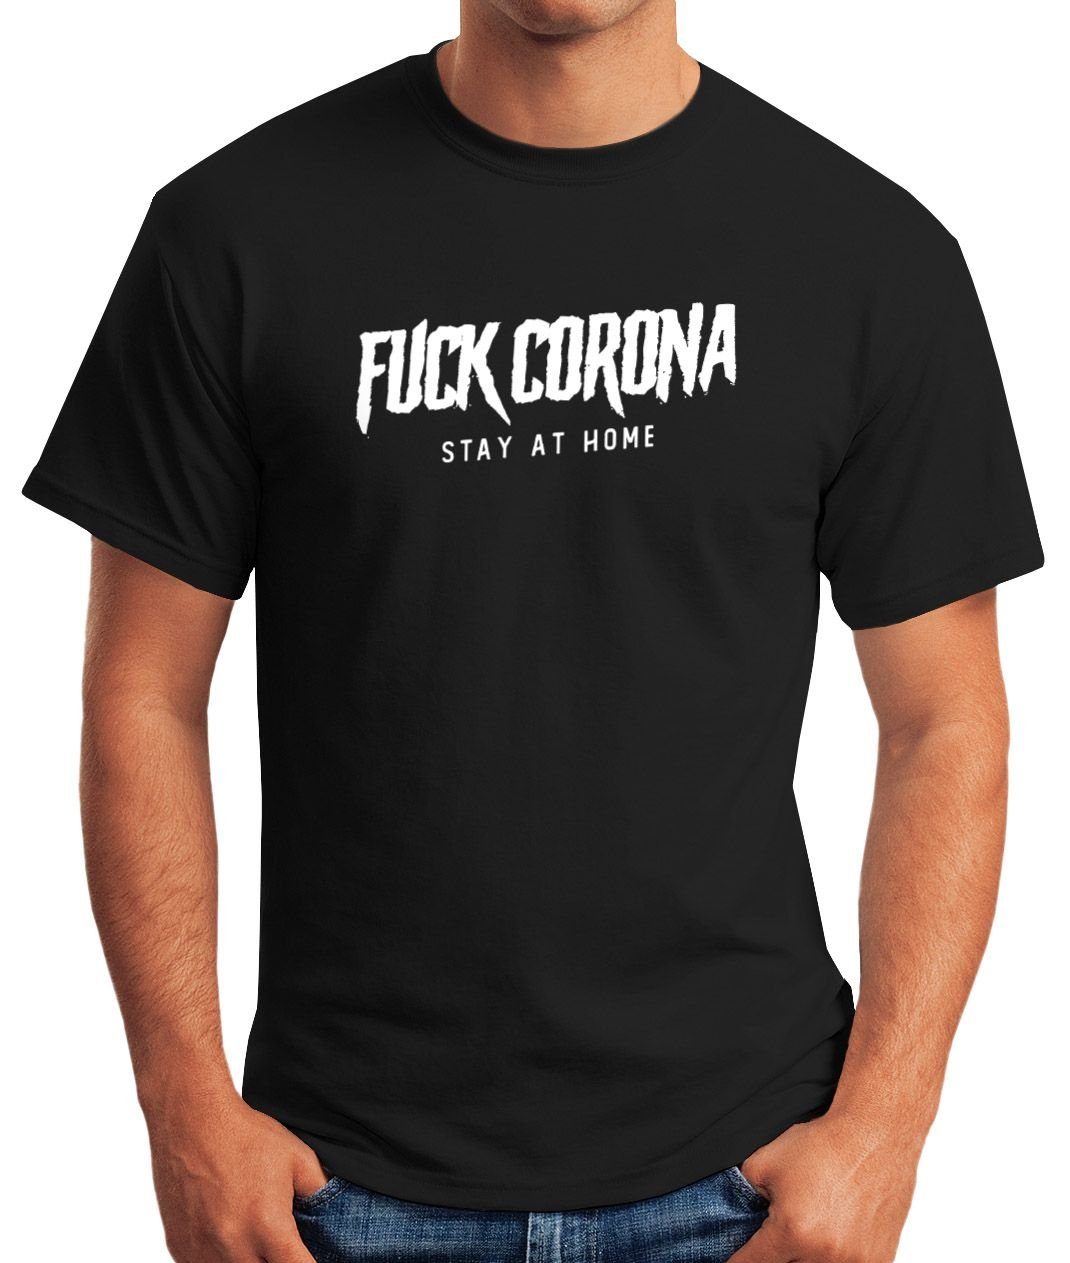 MoonWorks Print-Shirt Herren Fuck the curve Aufruf T-Shirt Flatten at Corona Statement Appell home Moonworks® mit Botschaft stay Print